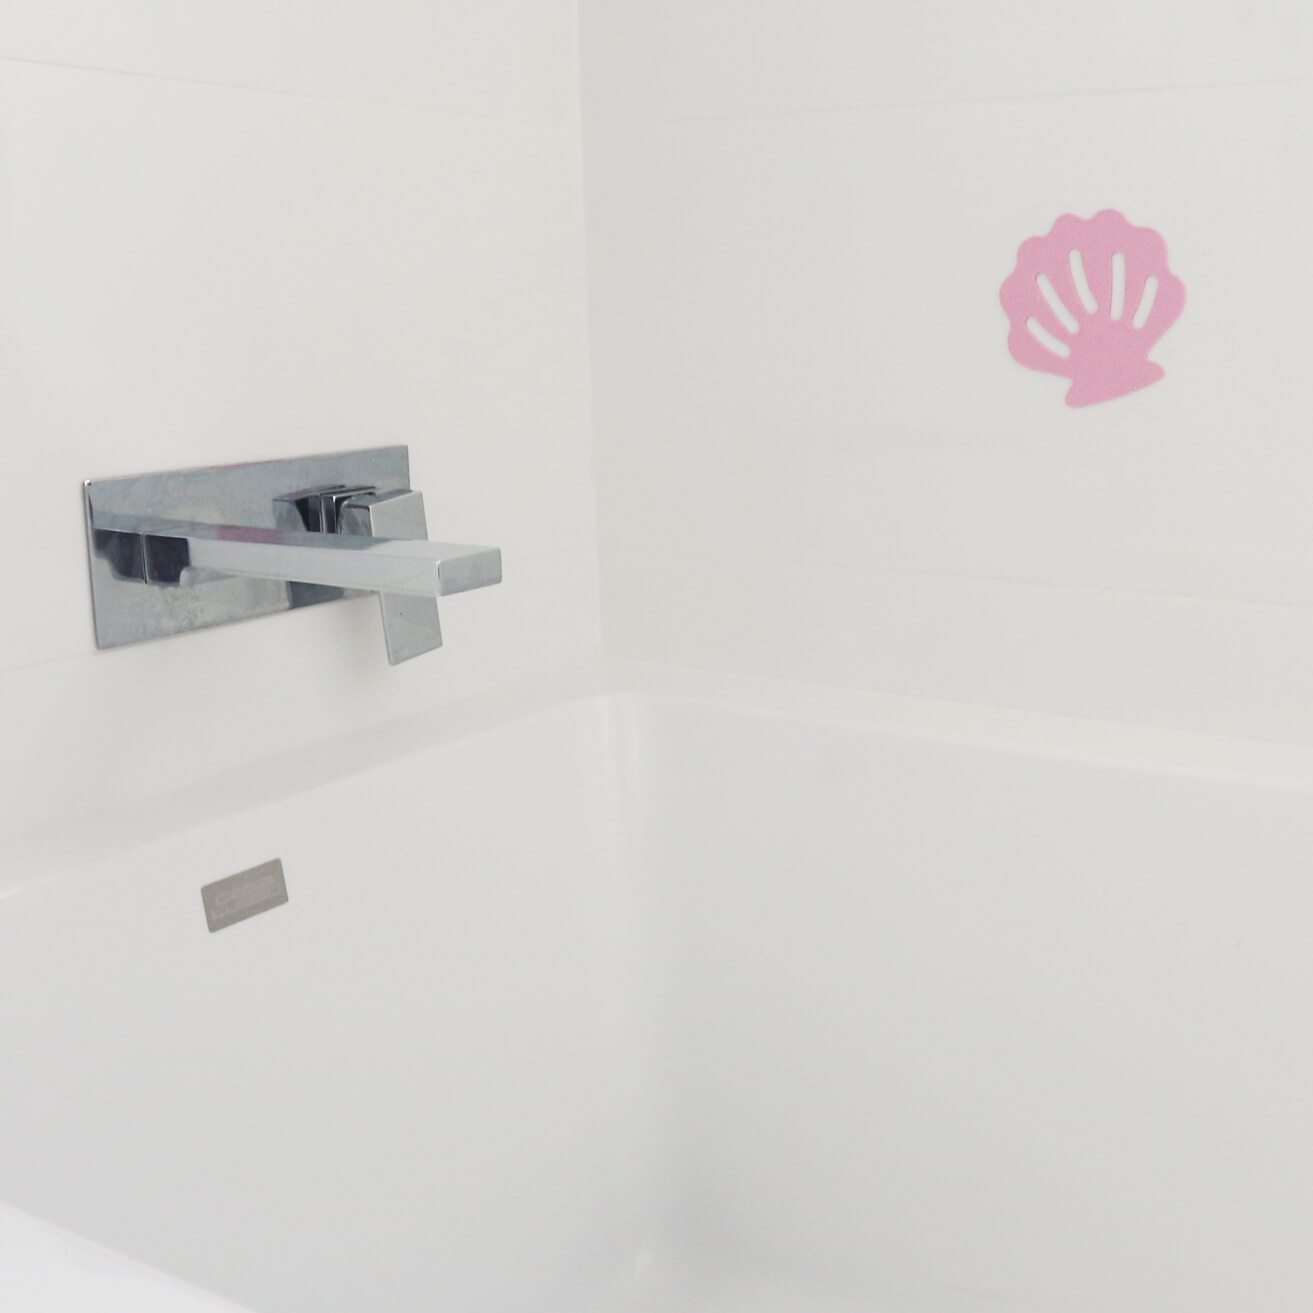 Place EVA shape on tiles or bath tub